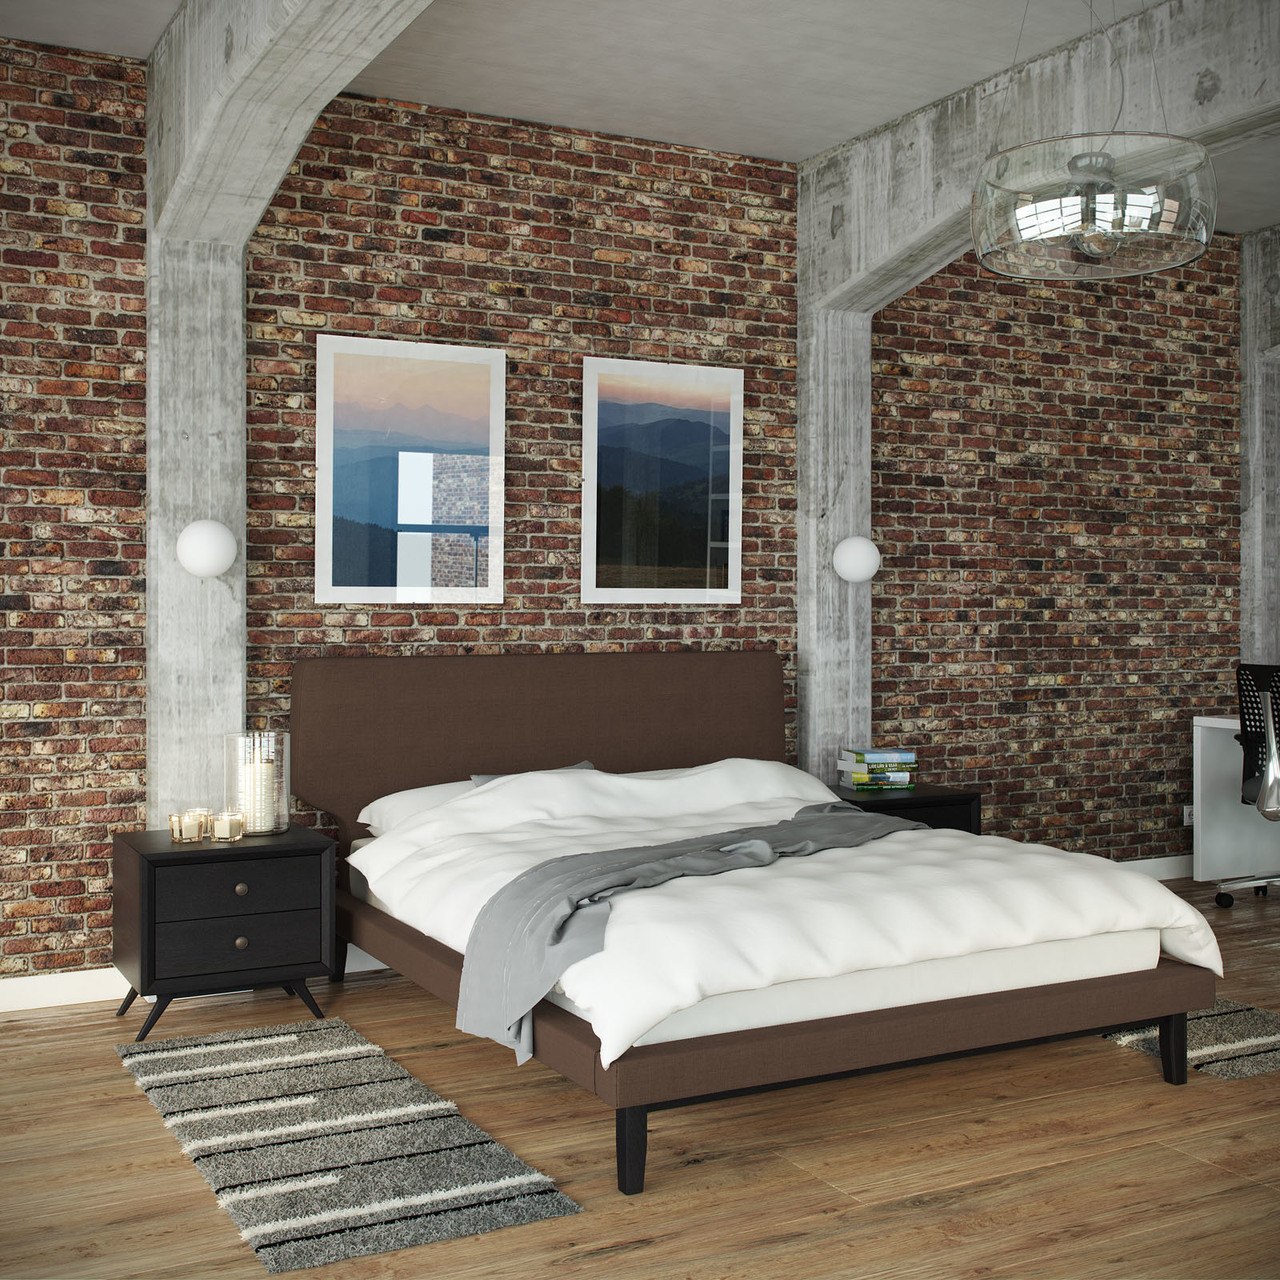 Choosing A Mid Century Bedroom Set From Manhattan Home Design